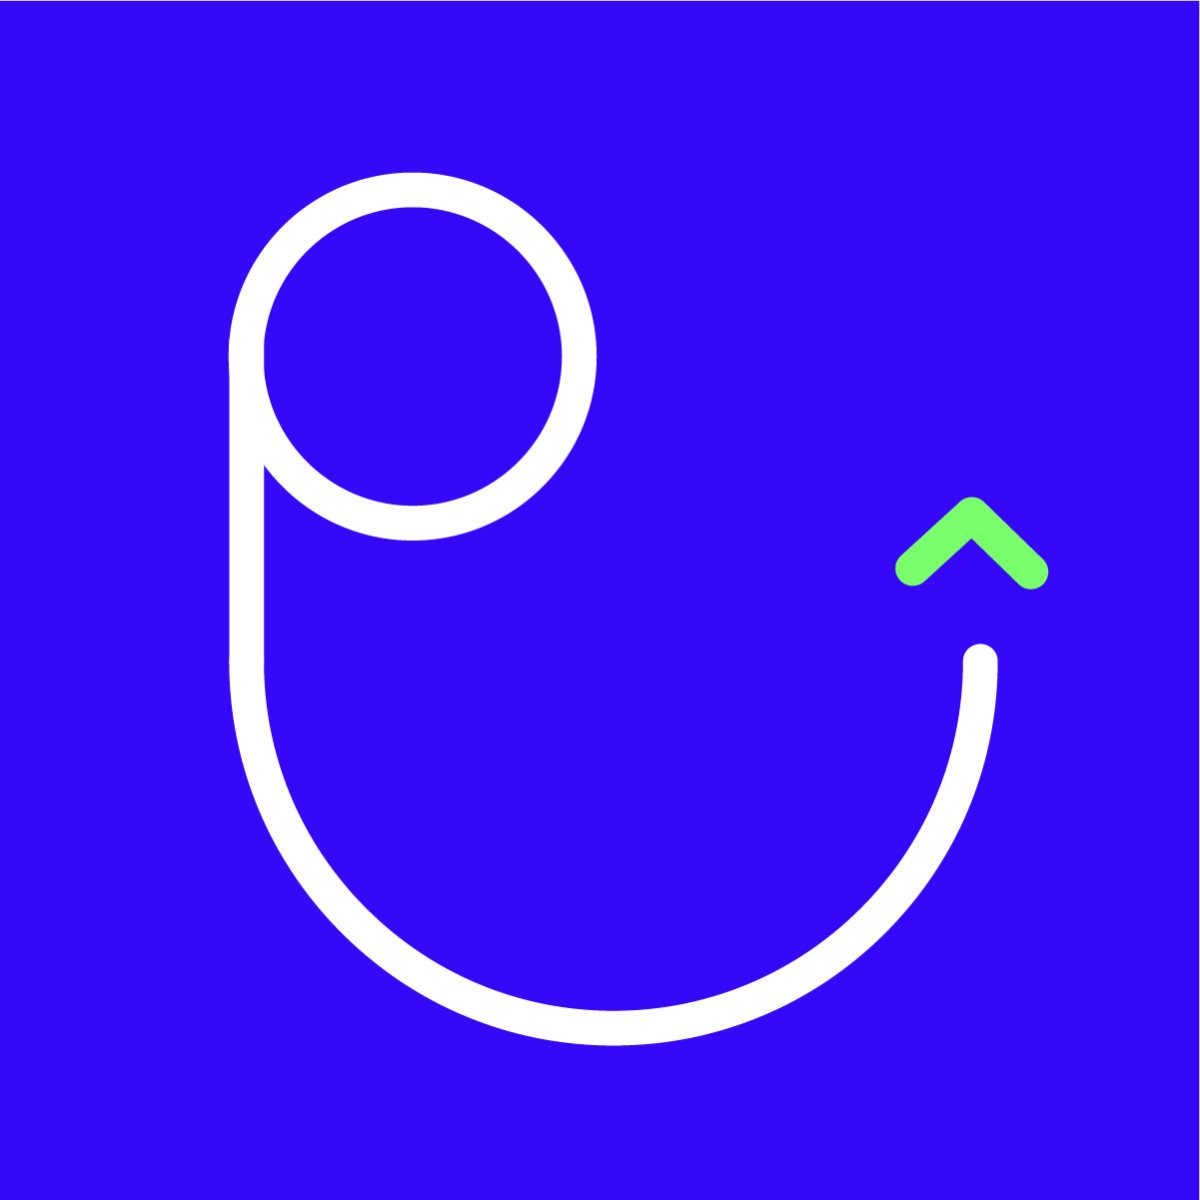 Hire Shopify Experts to integrate Popper â€‘ Promotion Popâ€‘up app into a Shopify store